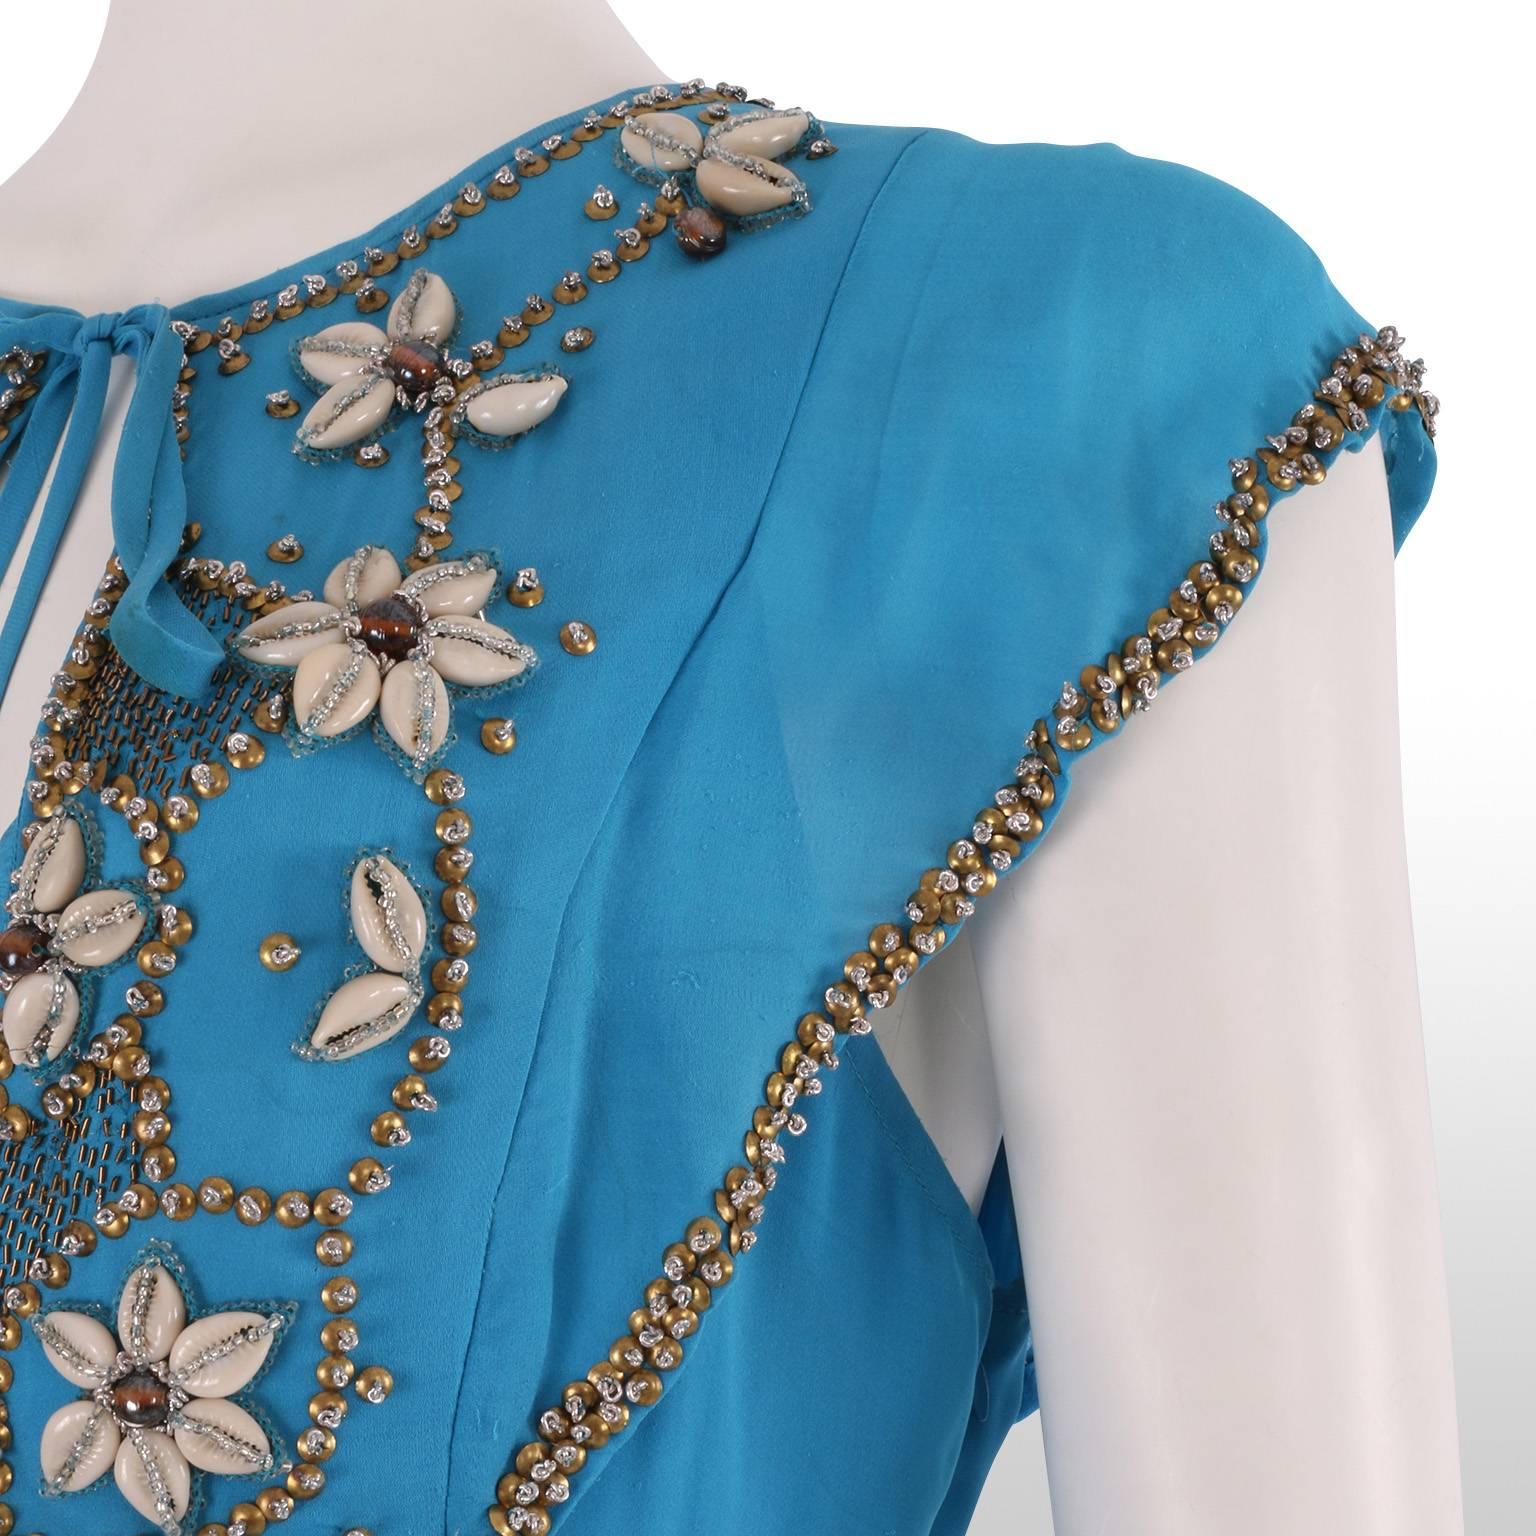 Matthew Williamson Cerulean Blue Dress with Beaded Shell Detail Size UK 10 2